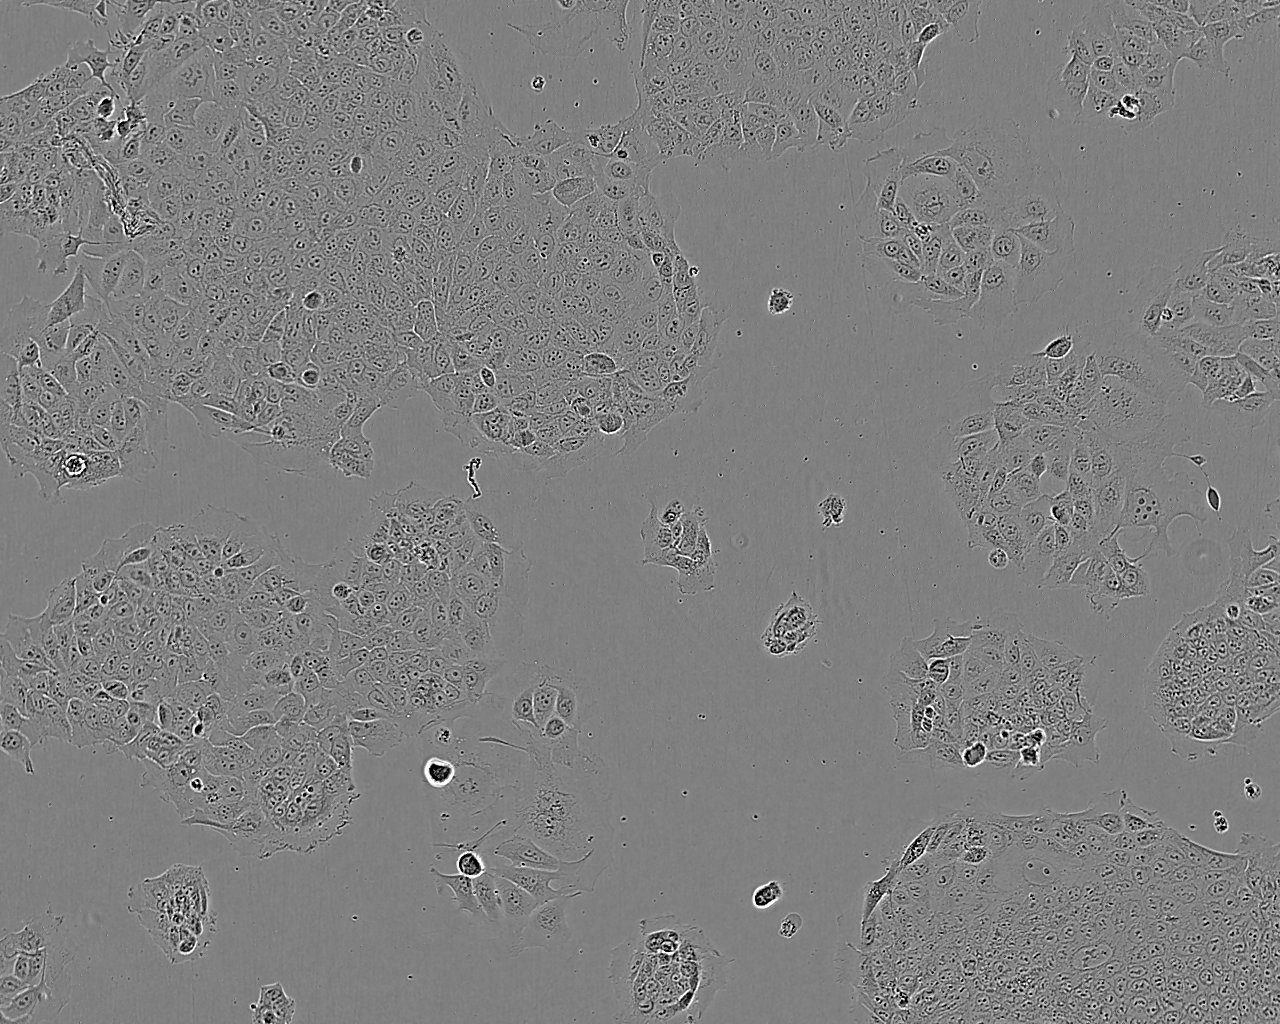 NCI-H2170 Epithelial Cell|人肺鳞癌传代细胞(有STR鉴定)